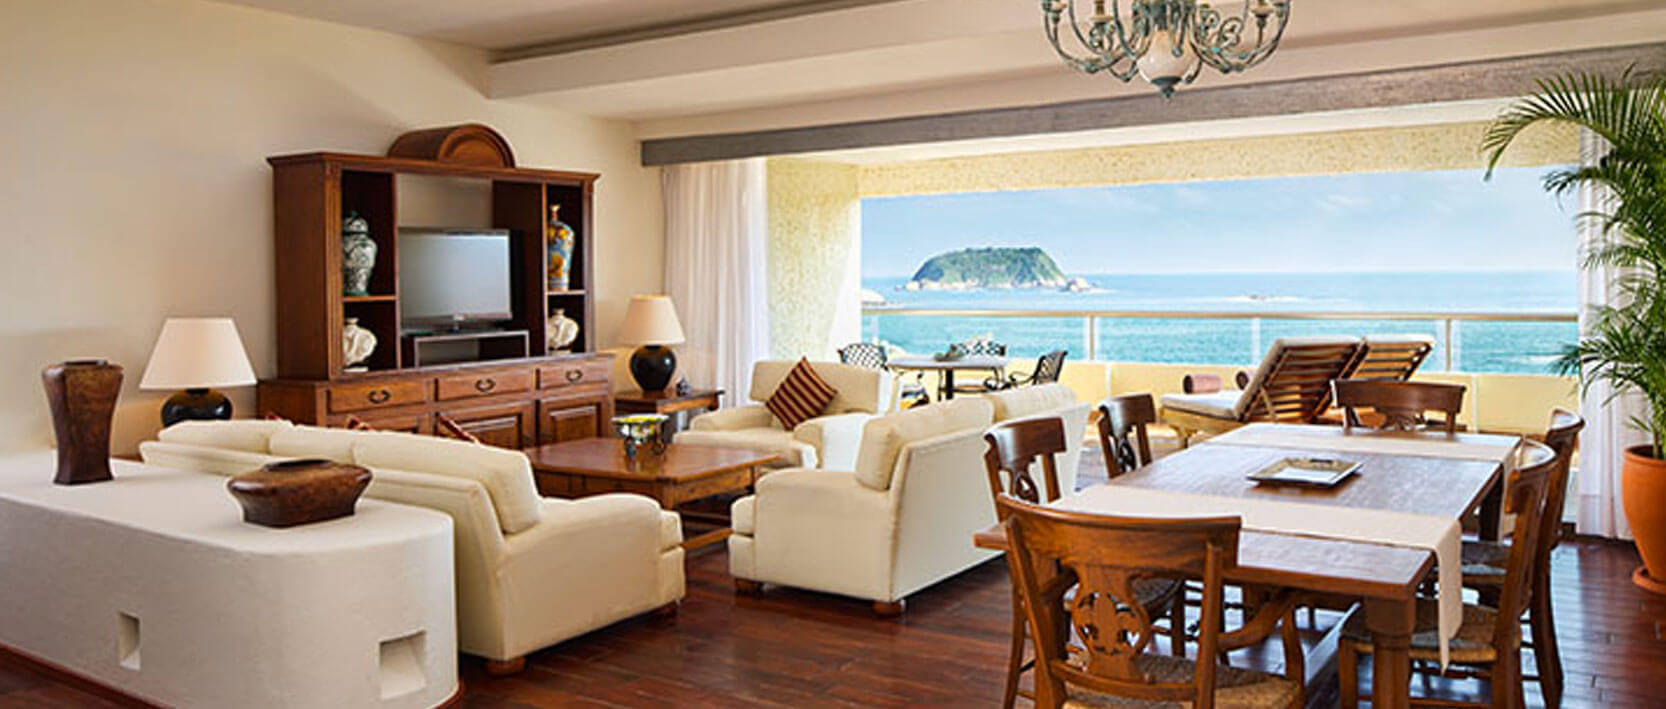 Dreams Huatulco Resort Accommodations - Preferred Club Presidential Suite